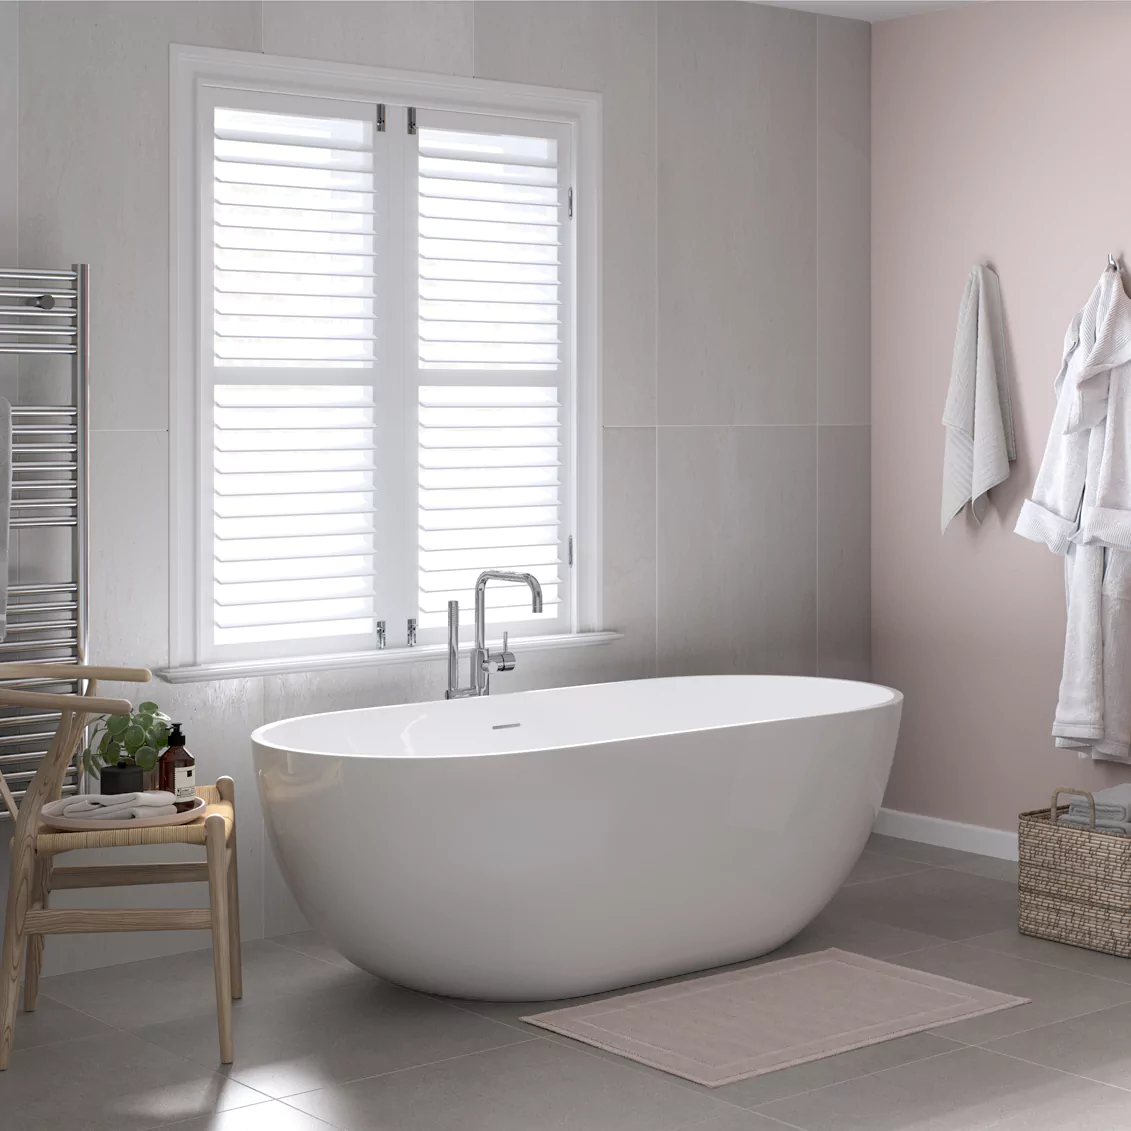 Tissino Tanaro Freestanding Bath with or without Ledge Gloss White Finish size 1680mm x 780mm lifestyle image 2